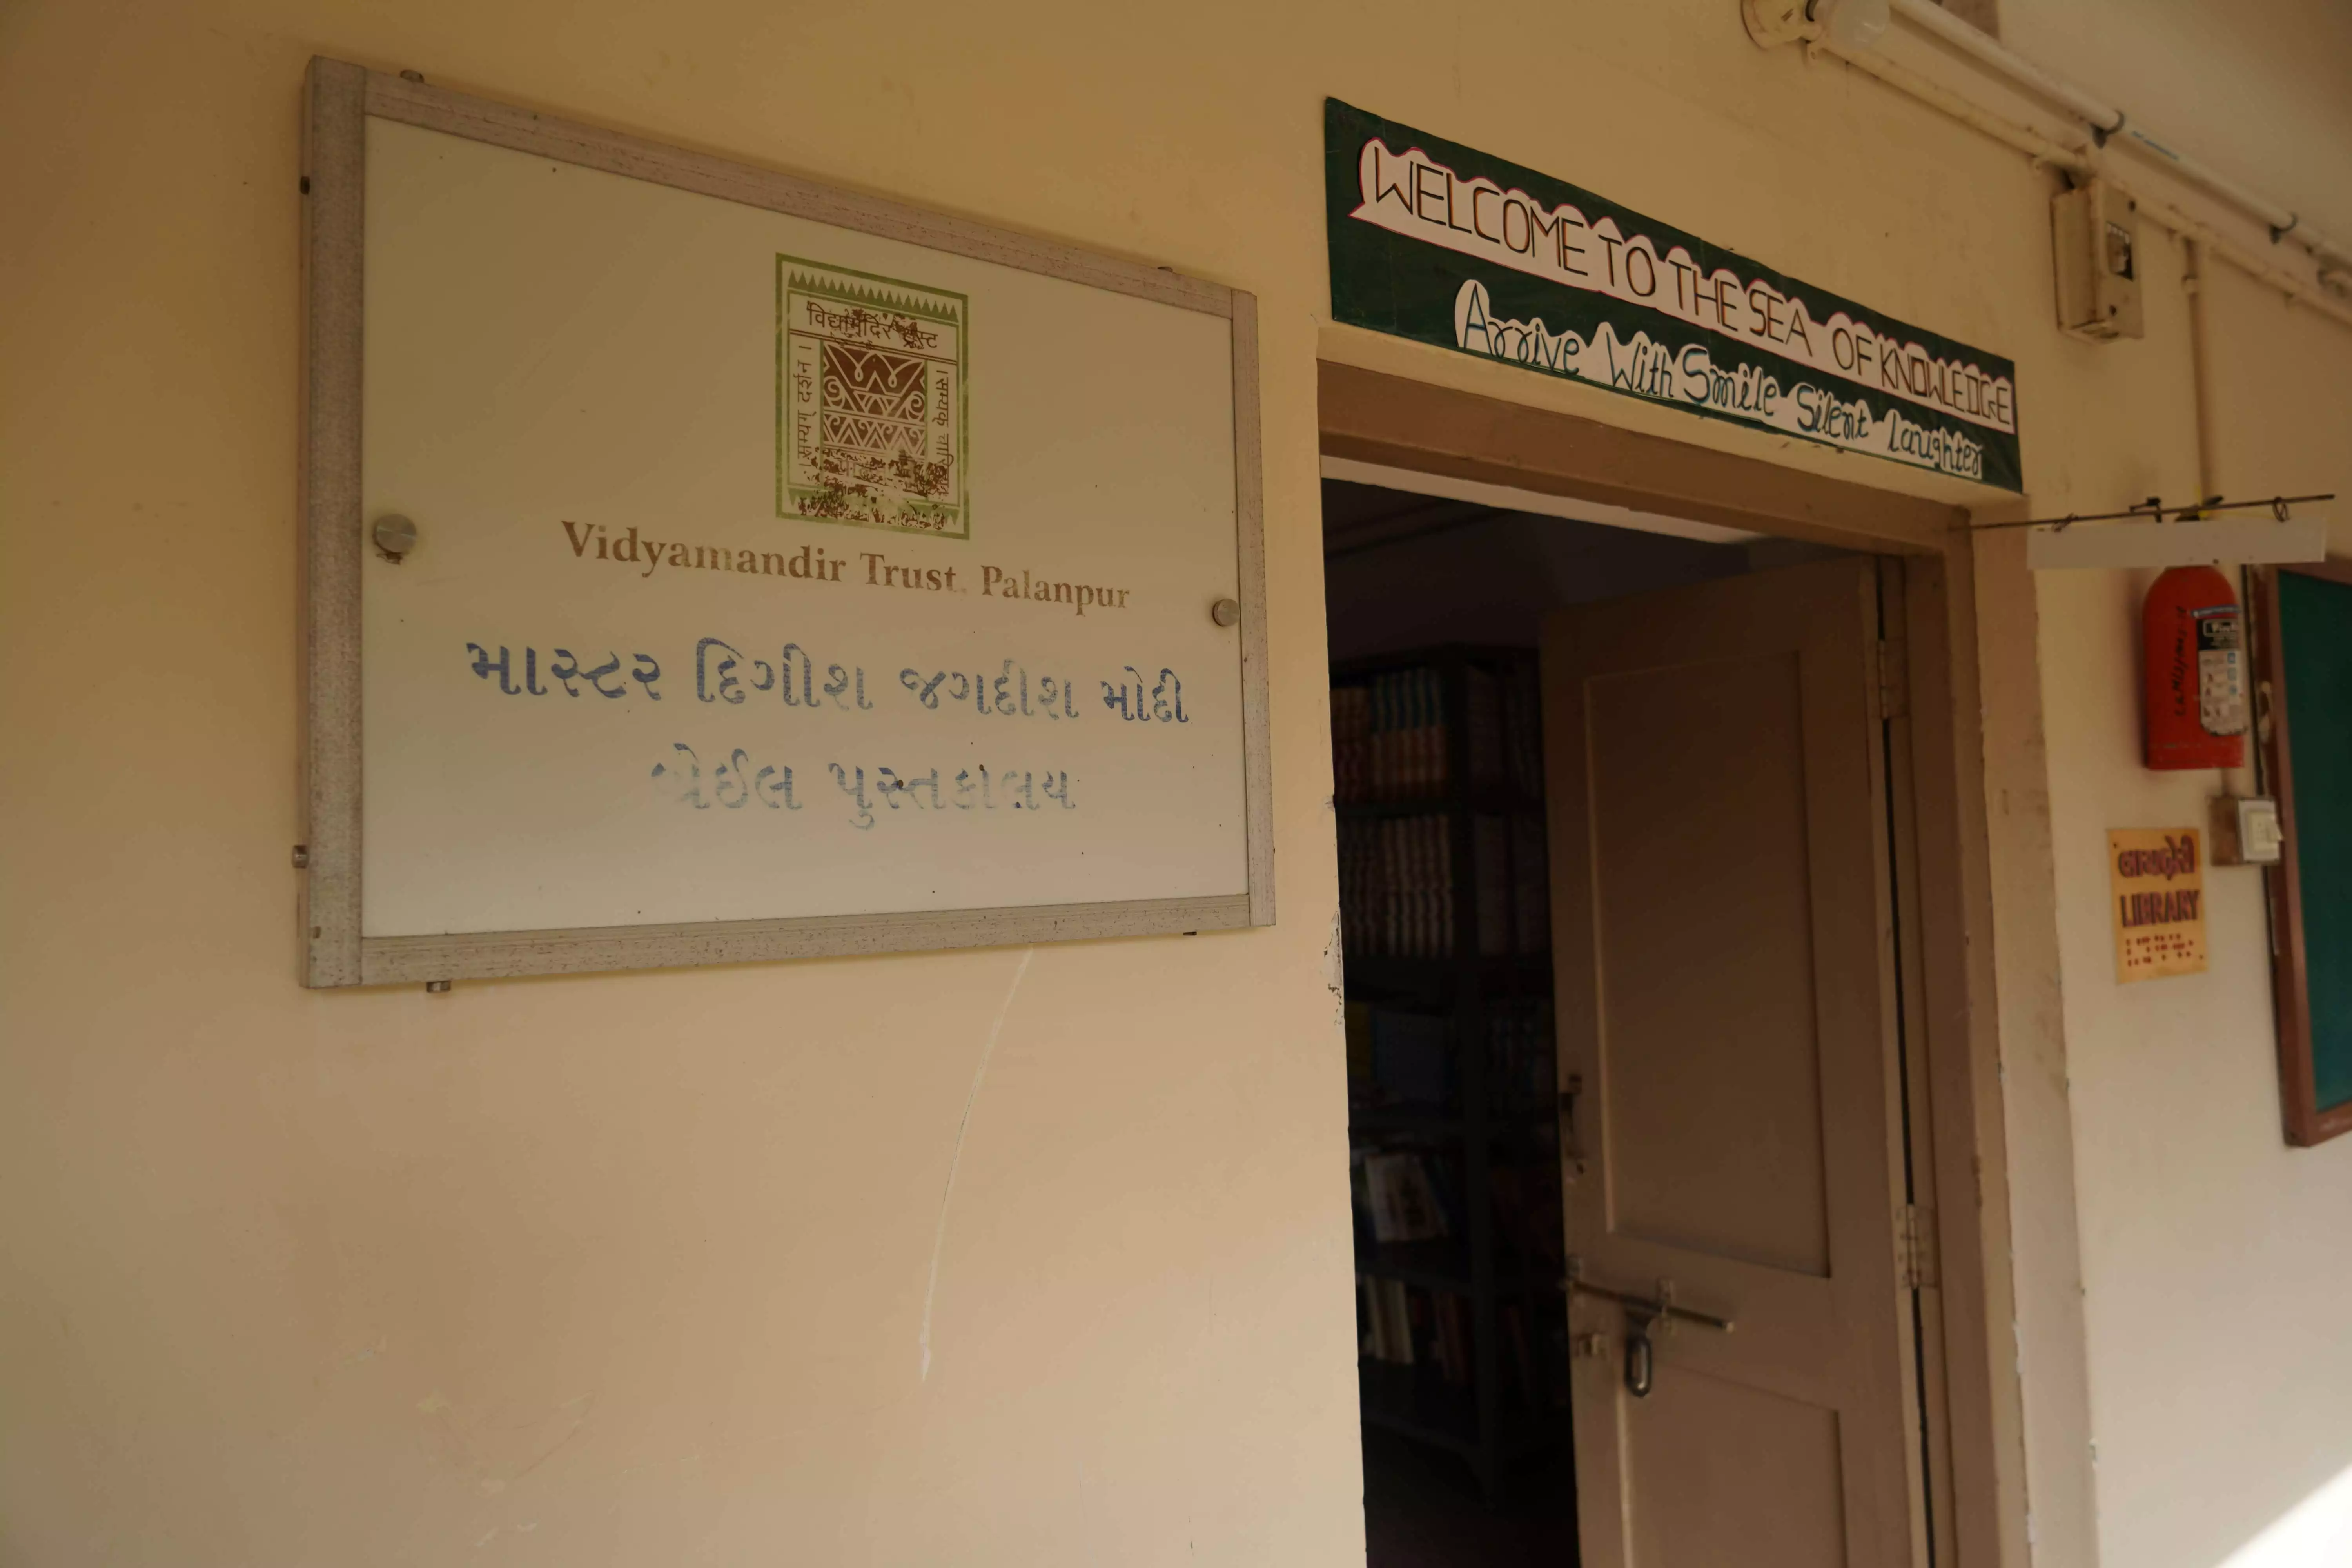 Master Digish Jagdish Modi Braille Library - Building Phto